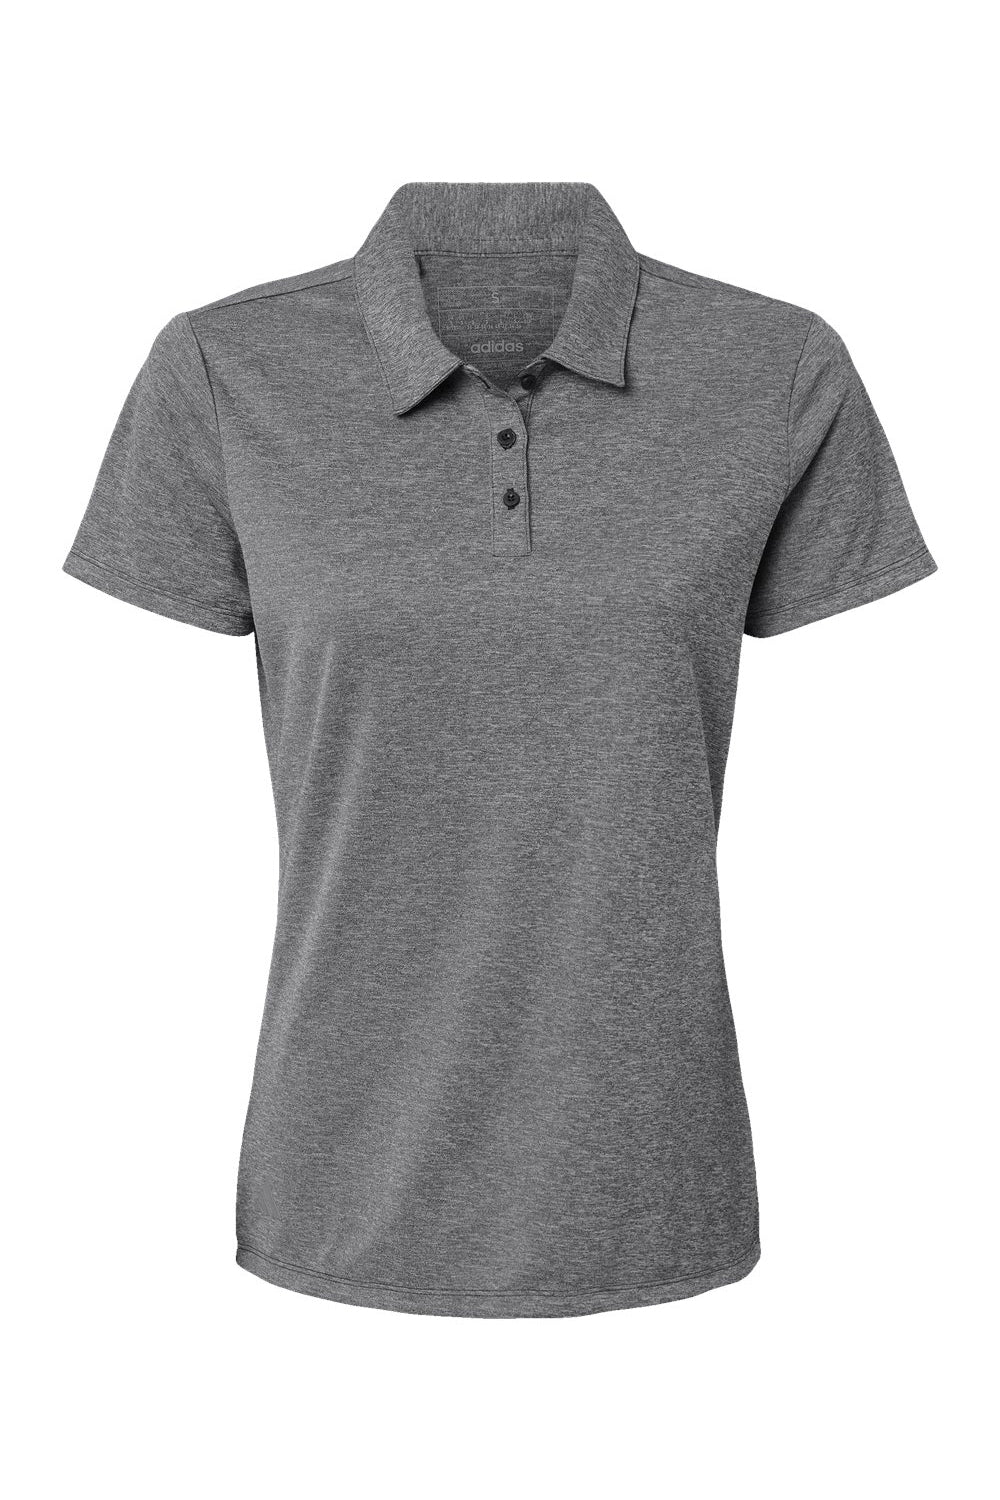 Adidas A583 Womens Heathered Short Sleeve Polo Shirt Black Melange Flat Front